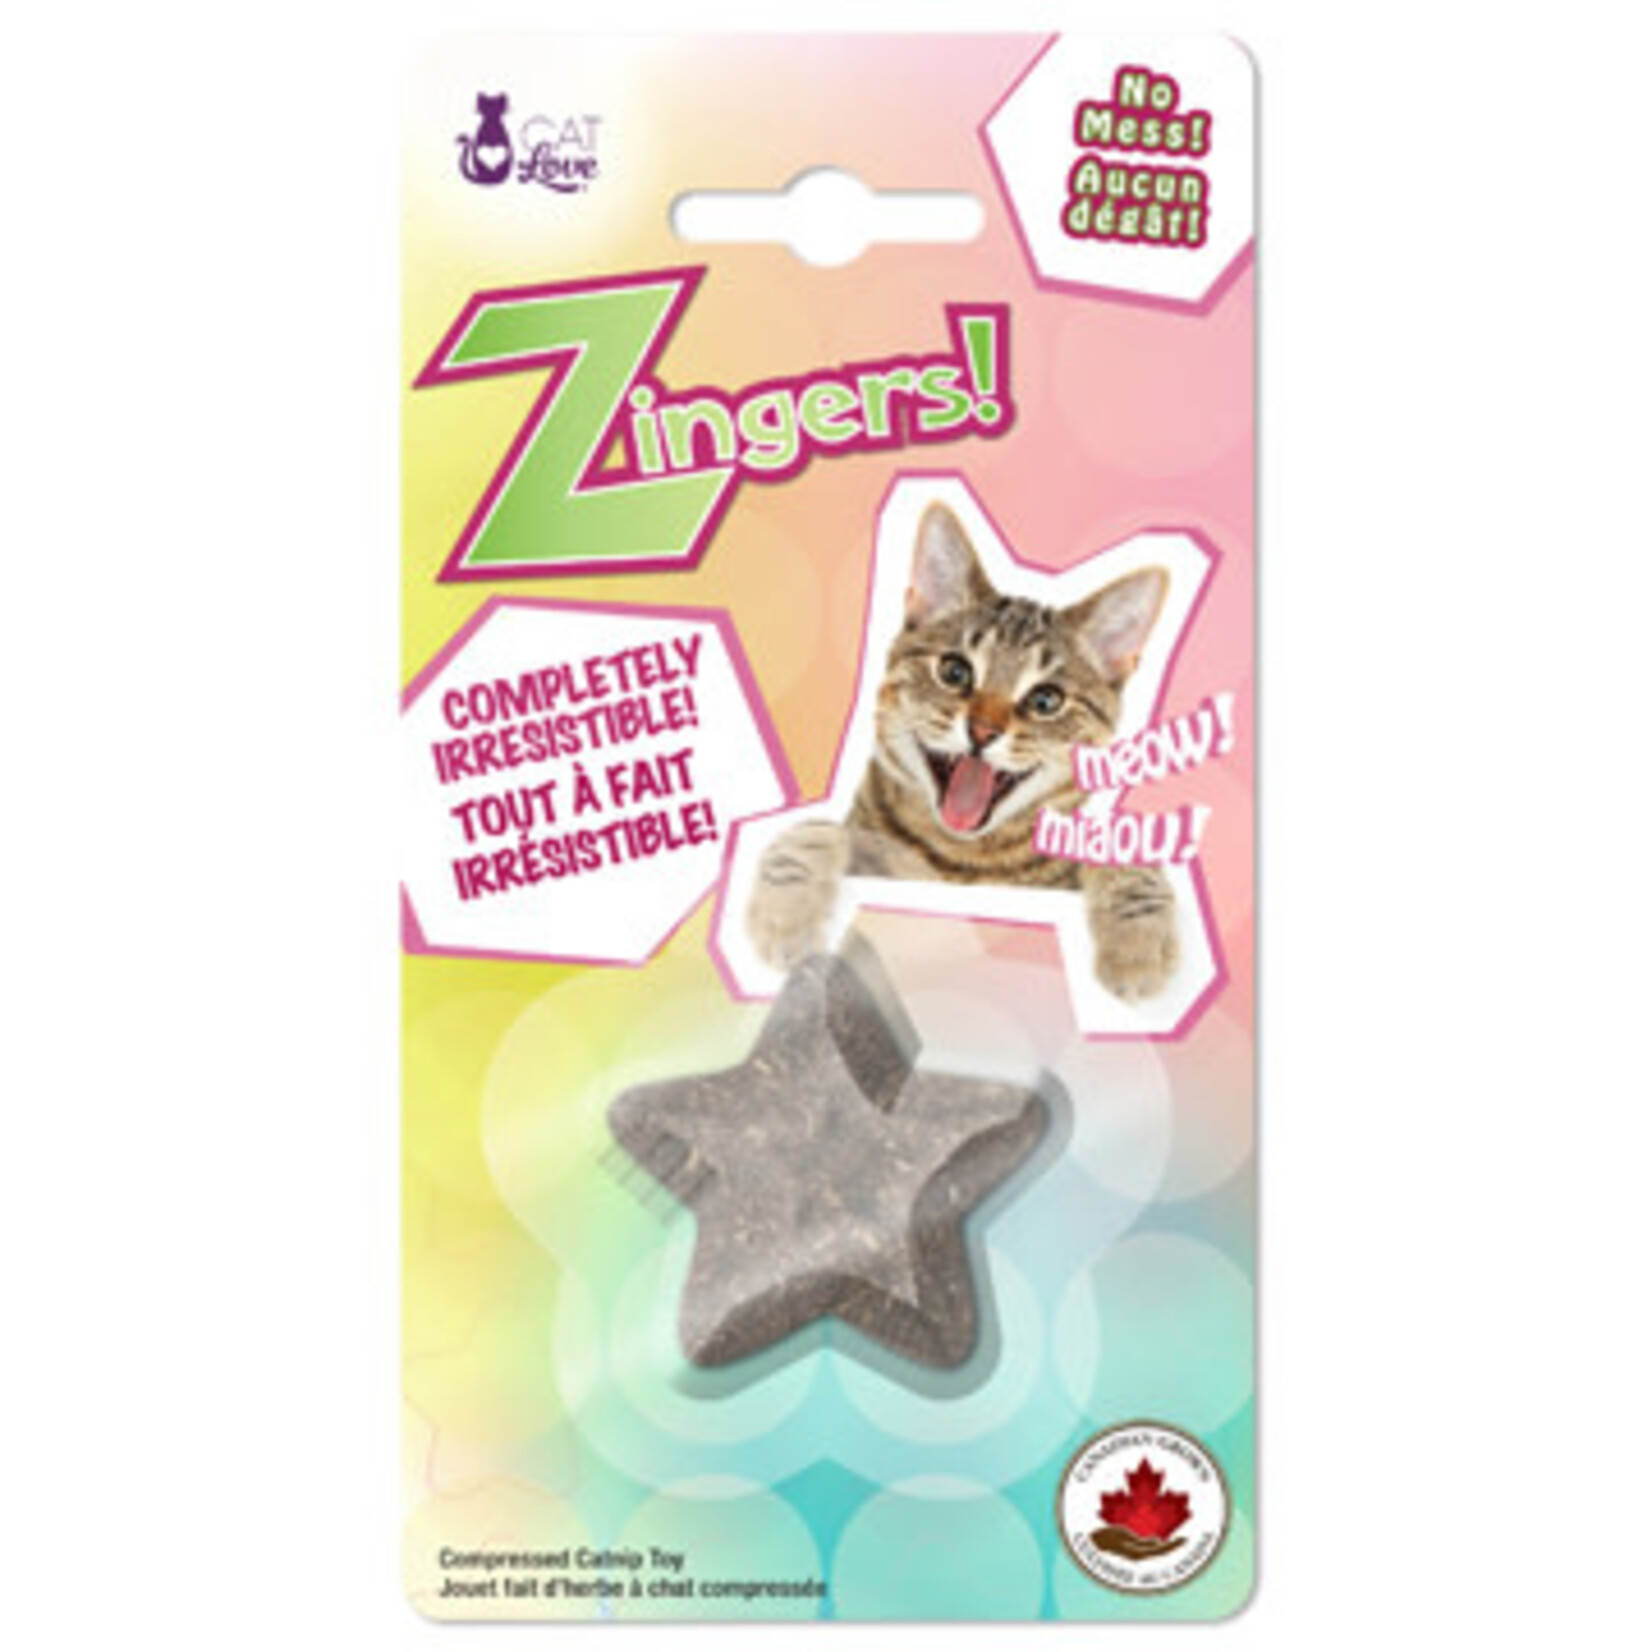 Cat Love Cat Love Zingers! Heat pressed catnip toy - Star shape - 8.5 g